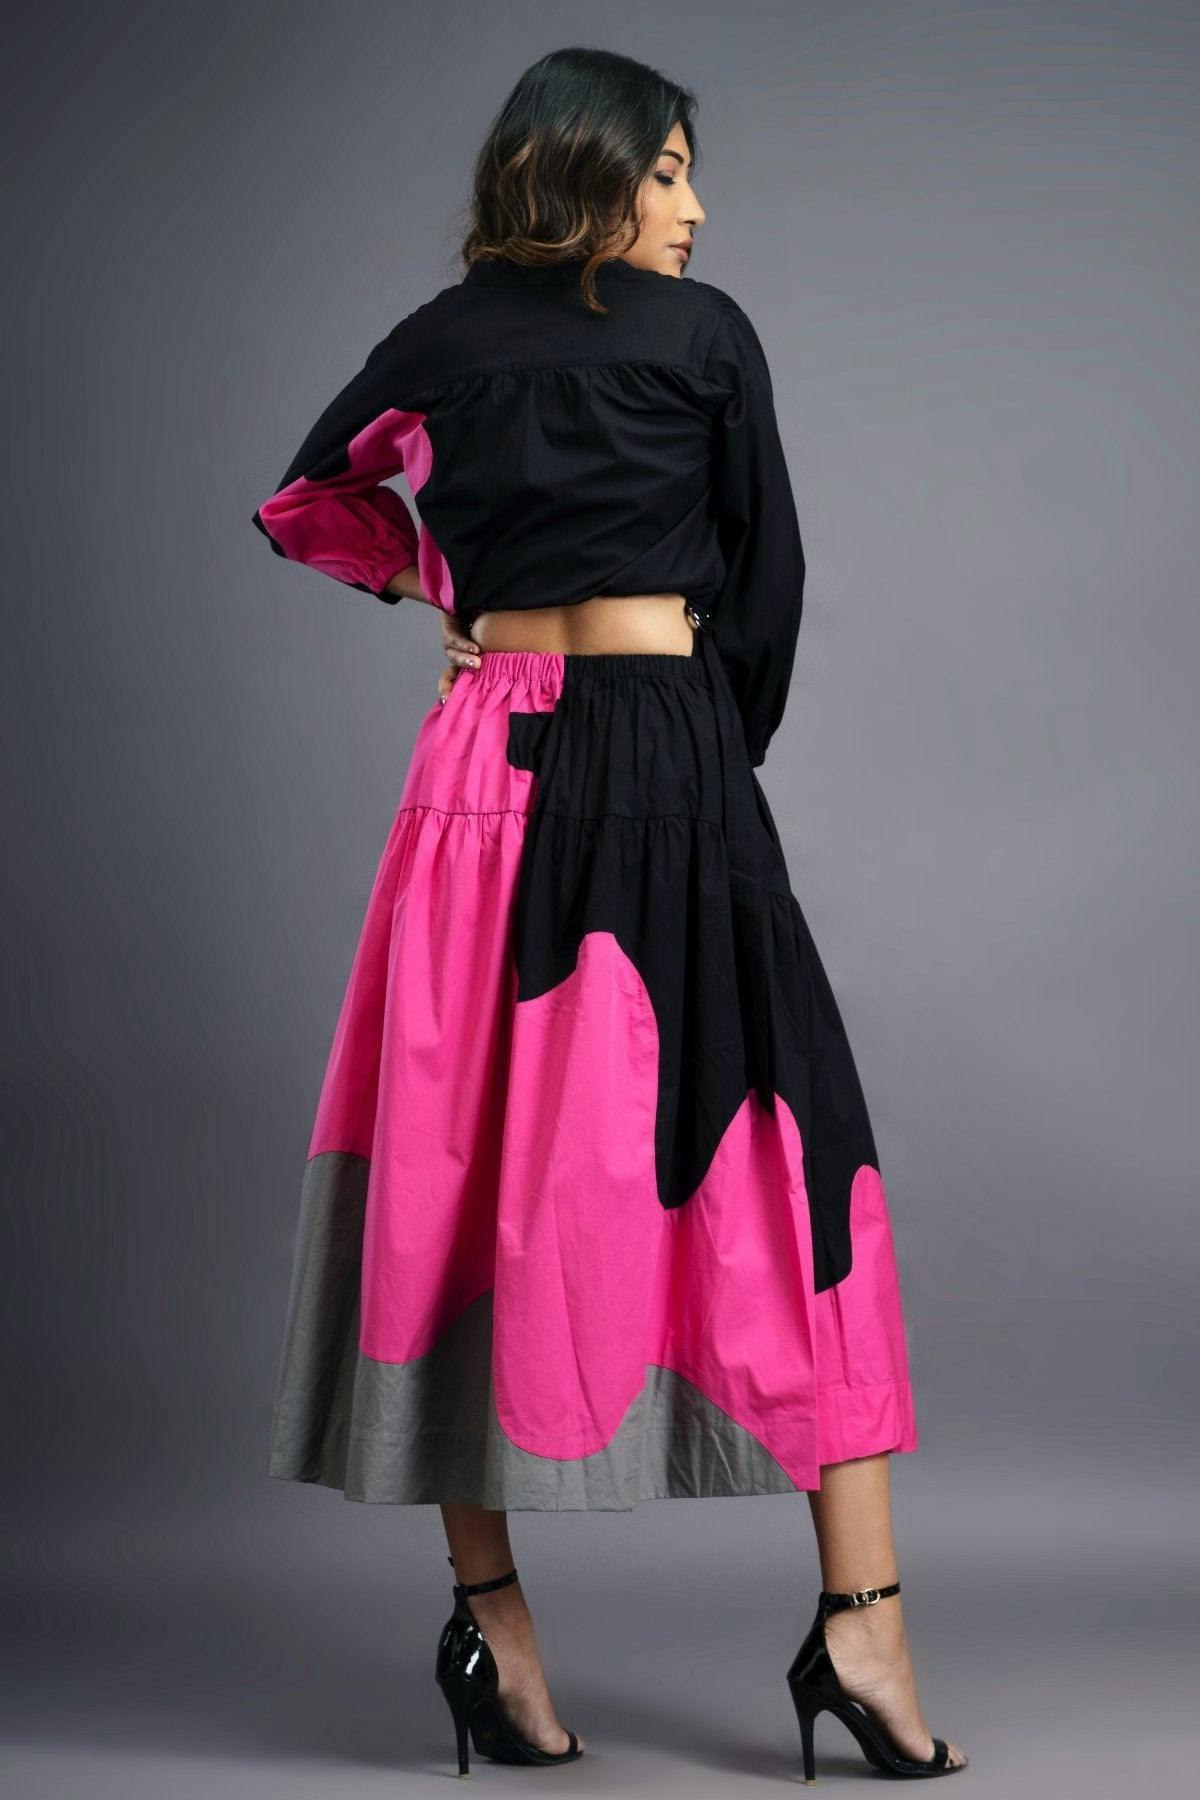 Thumbnail preview #1 for BB-1109-PG - Black Pink Shirt & Skirt Co-ord Set